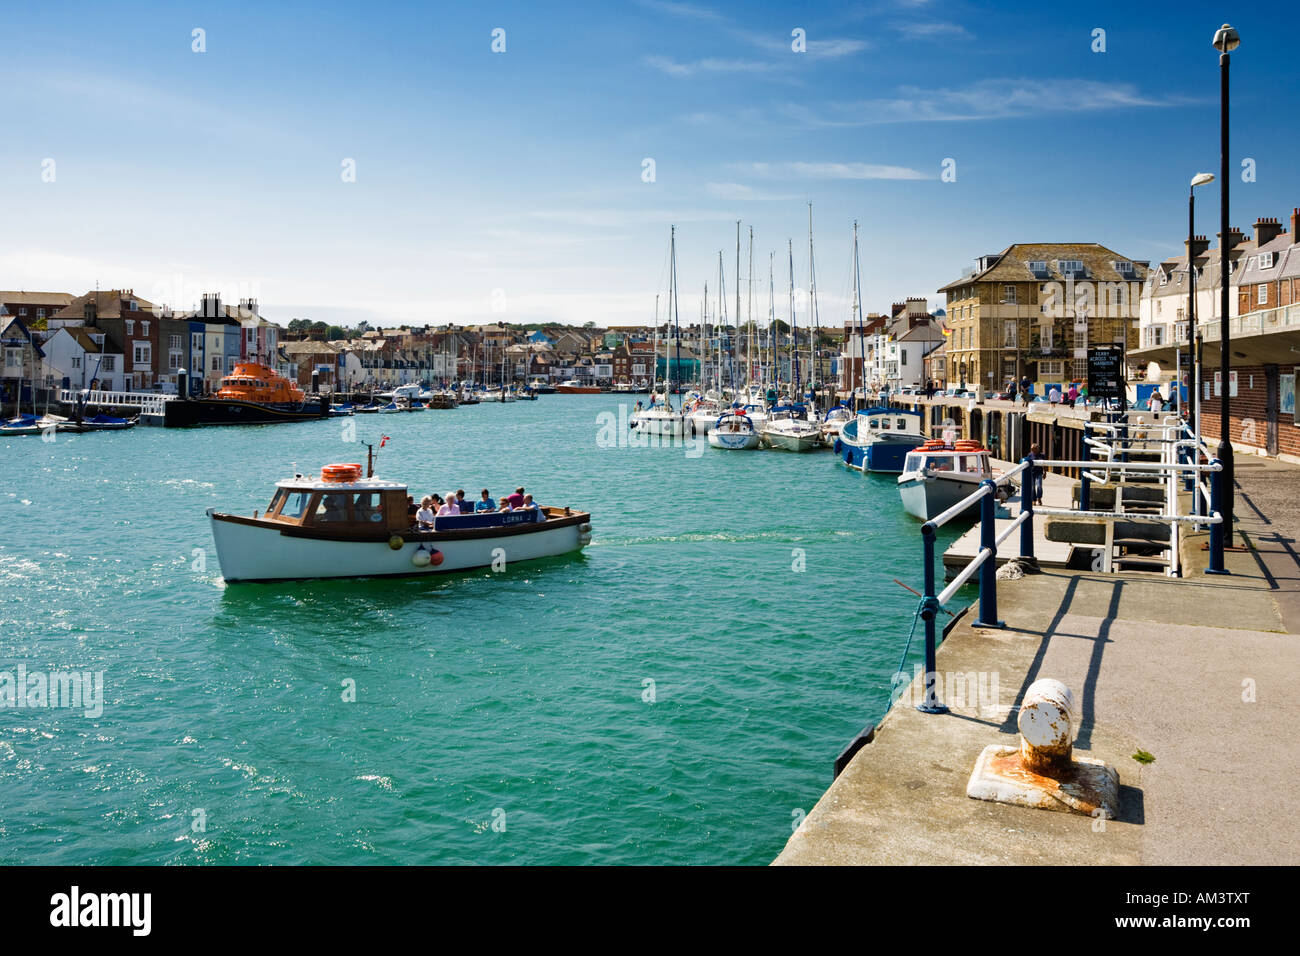 Port de Weymouth, Weymouth, Dorset, England, UK - petit voyage de plaisir ferry Banque D'Images